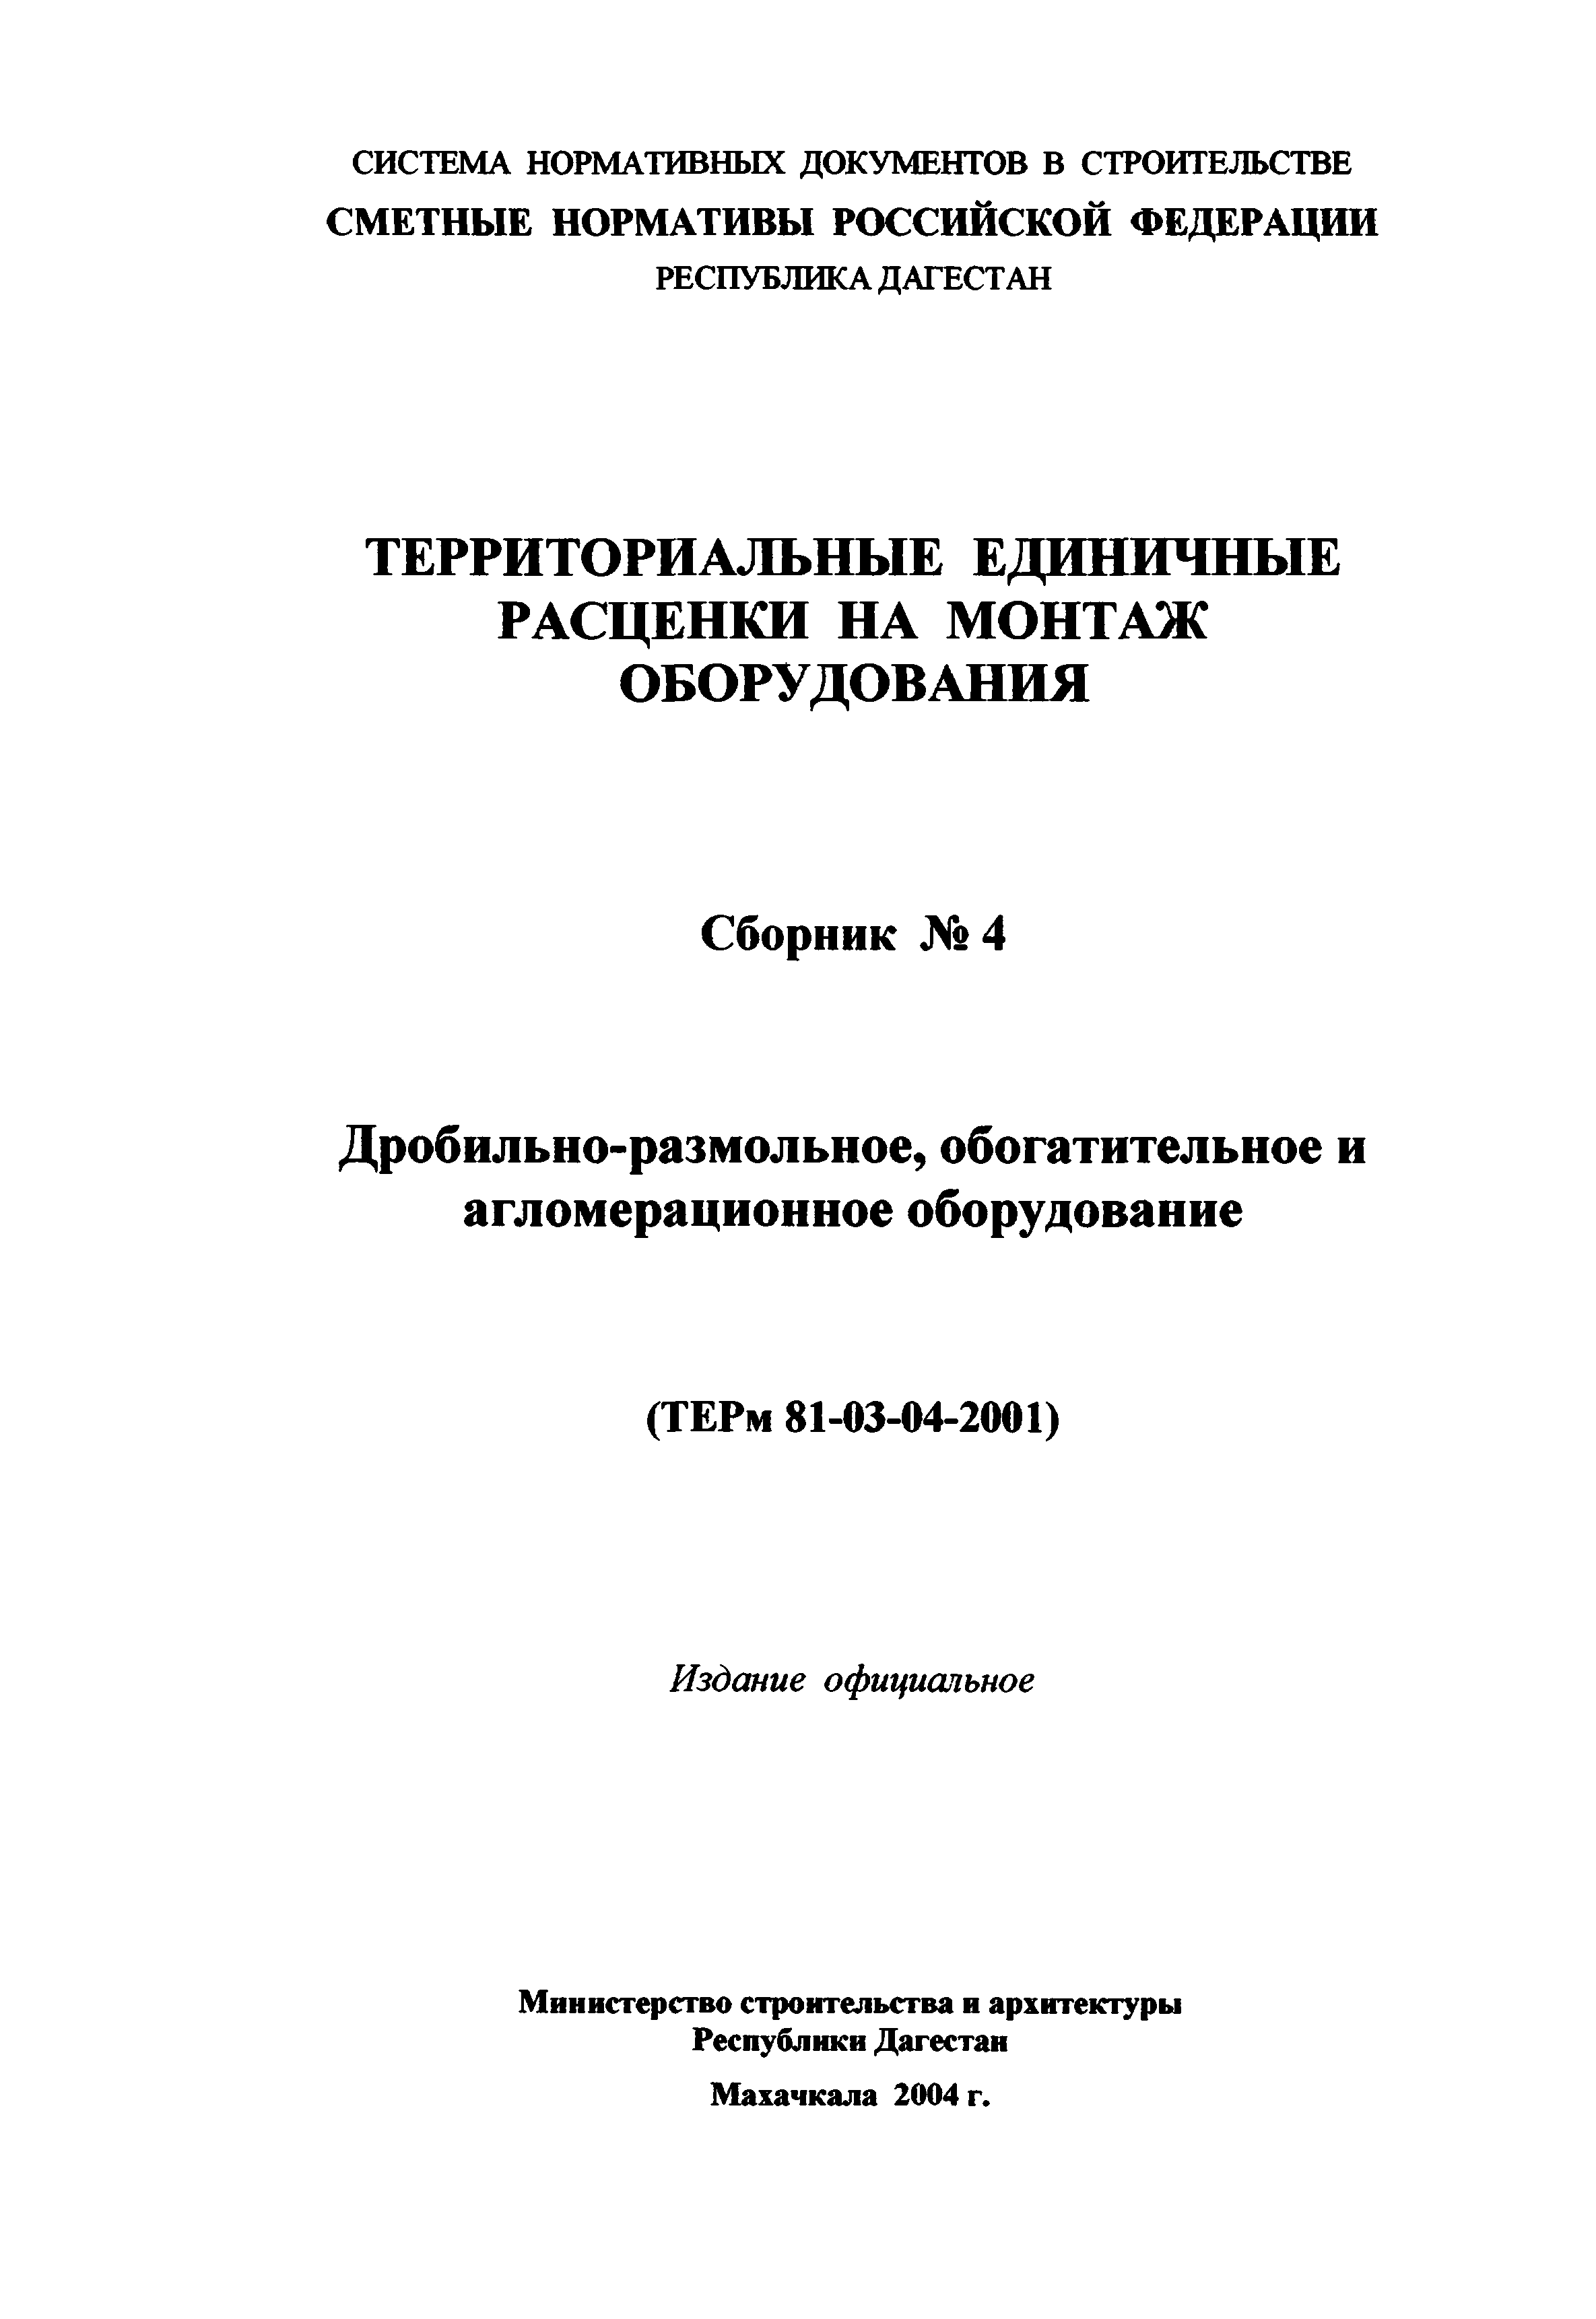 ТЕРм Республика Дагестан 2001-04